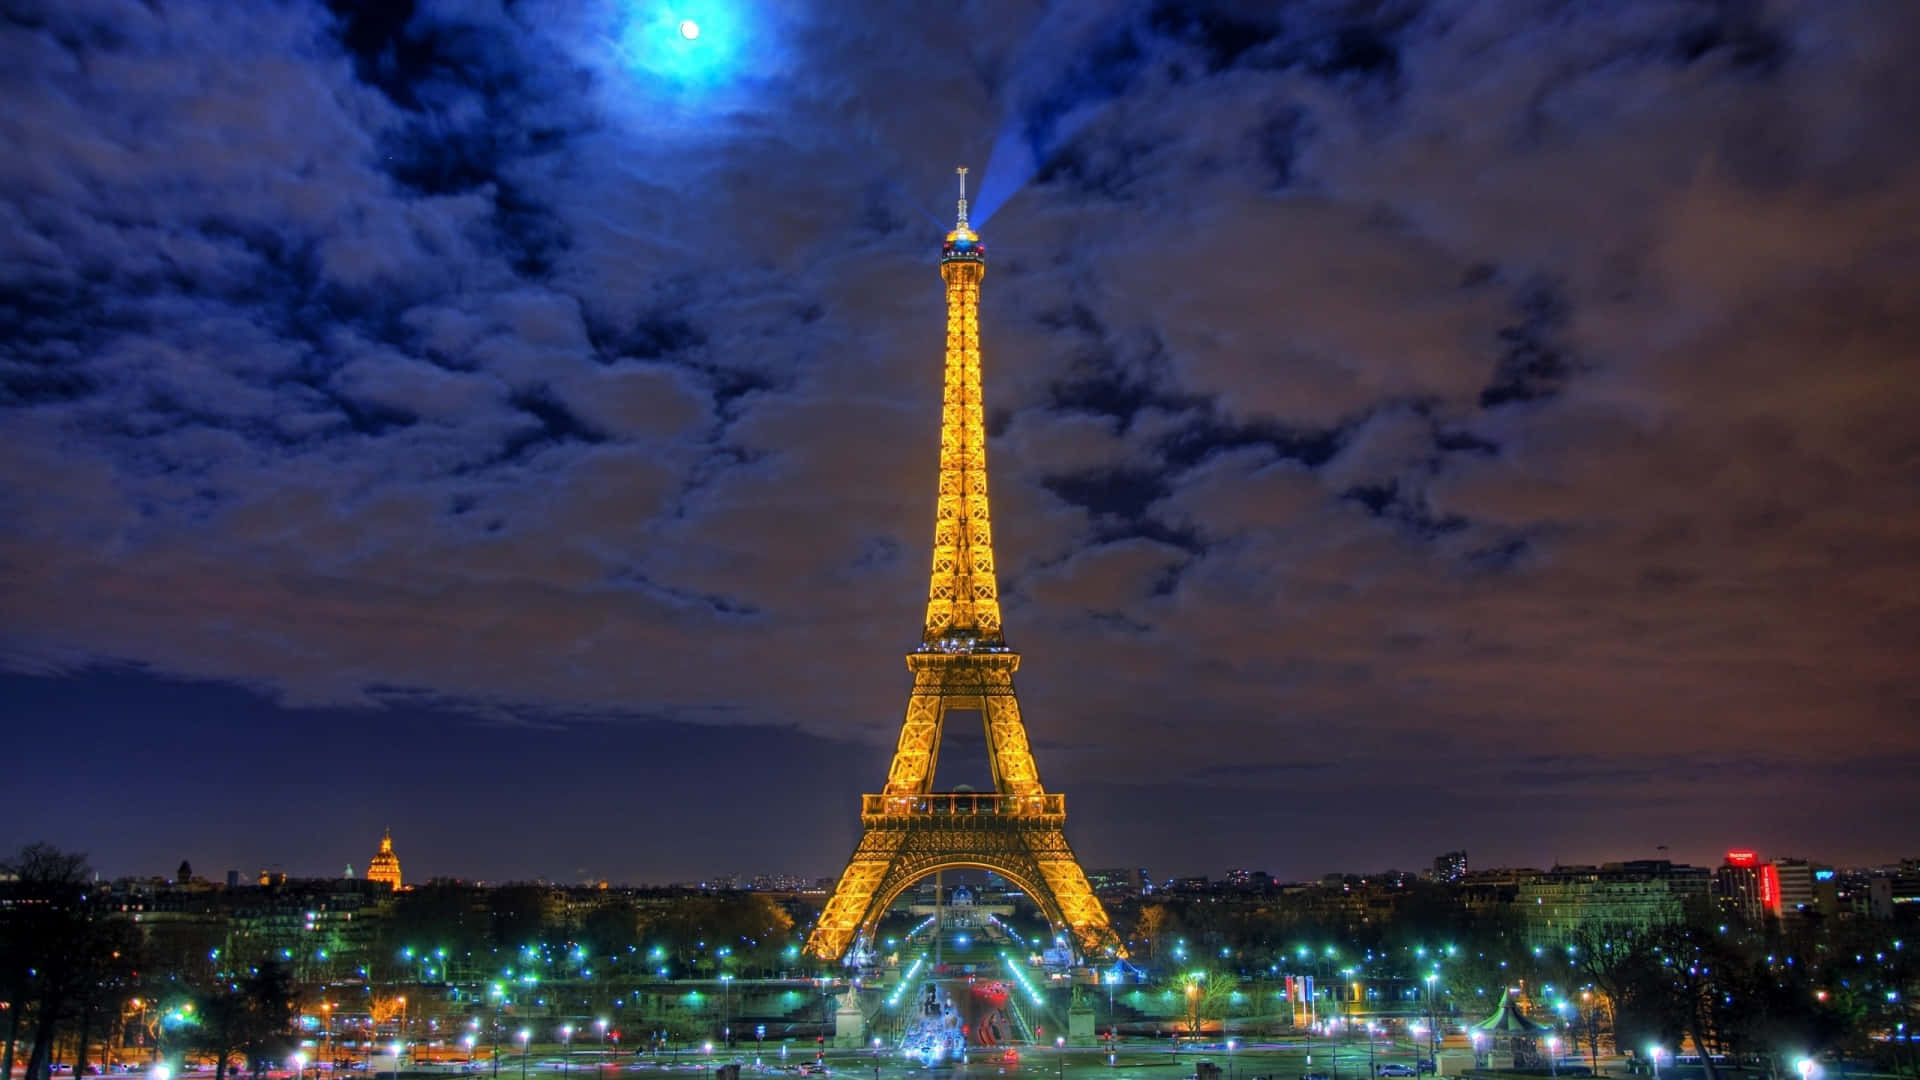 Imagende La Torre Eiffel Nublada Durante La Noche.